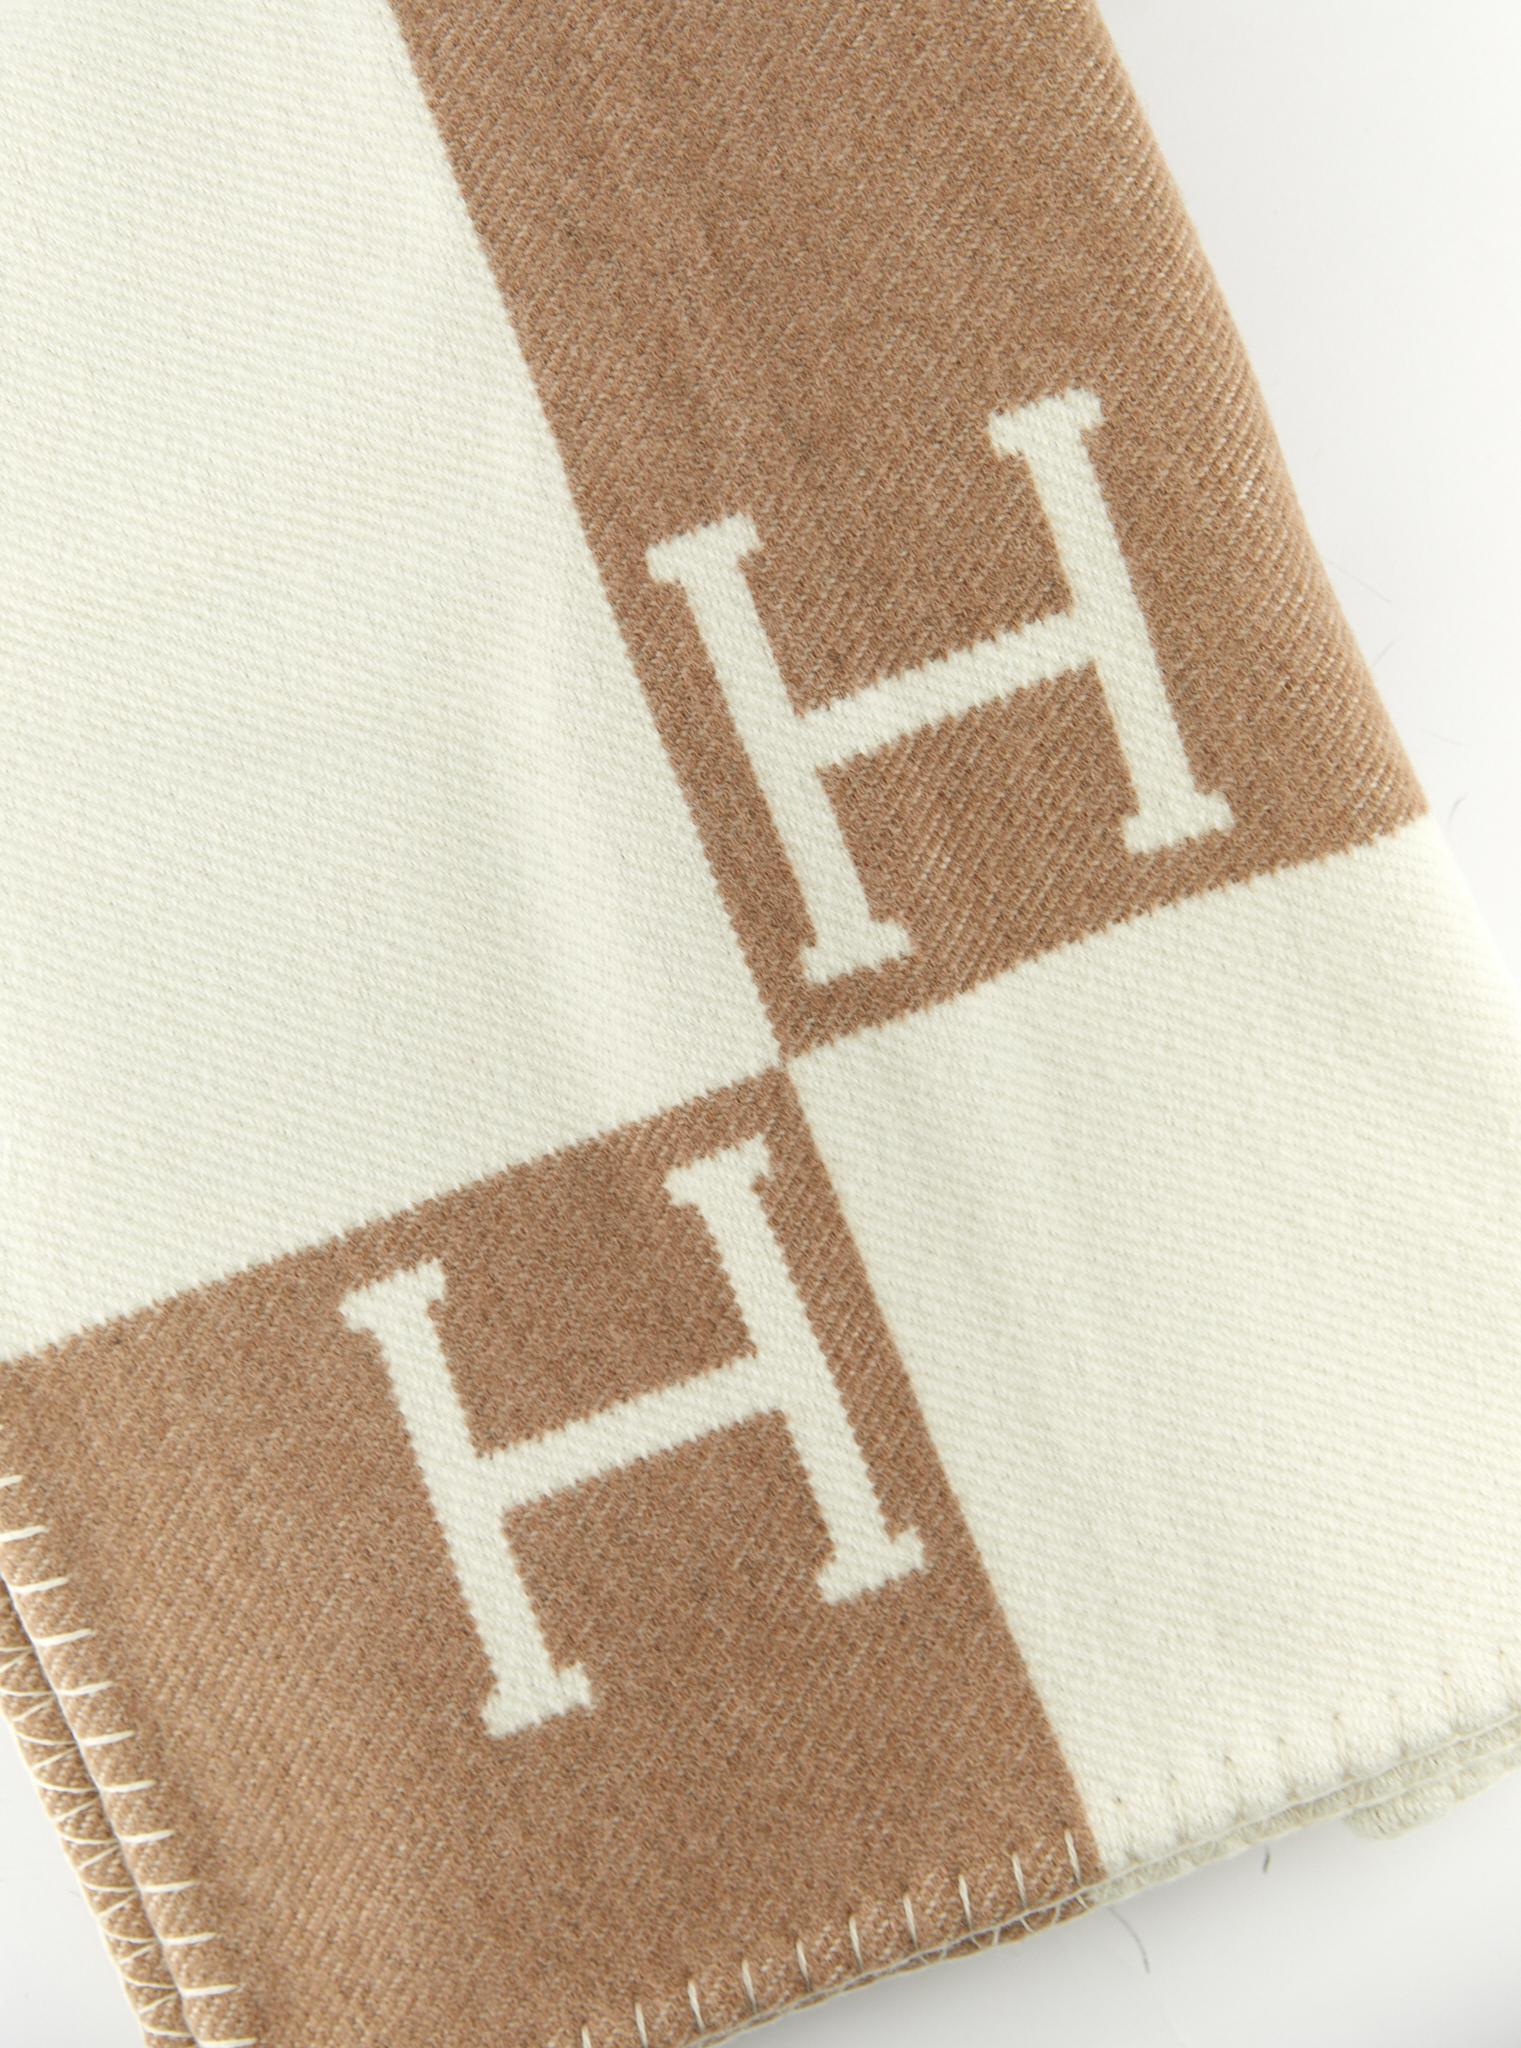 Hermès Avalon Baby Blanket in Noisette and Ecru

(90% merino wool, 10% cashmere)

Dimensions: L 100 x H 140 cm
